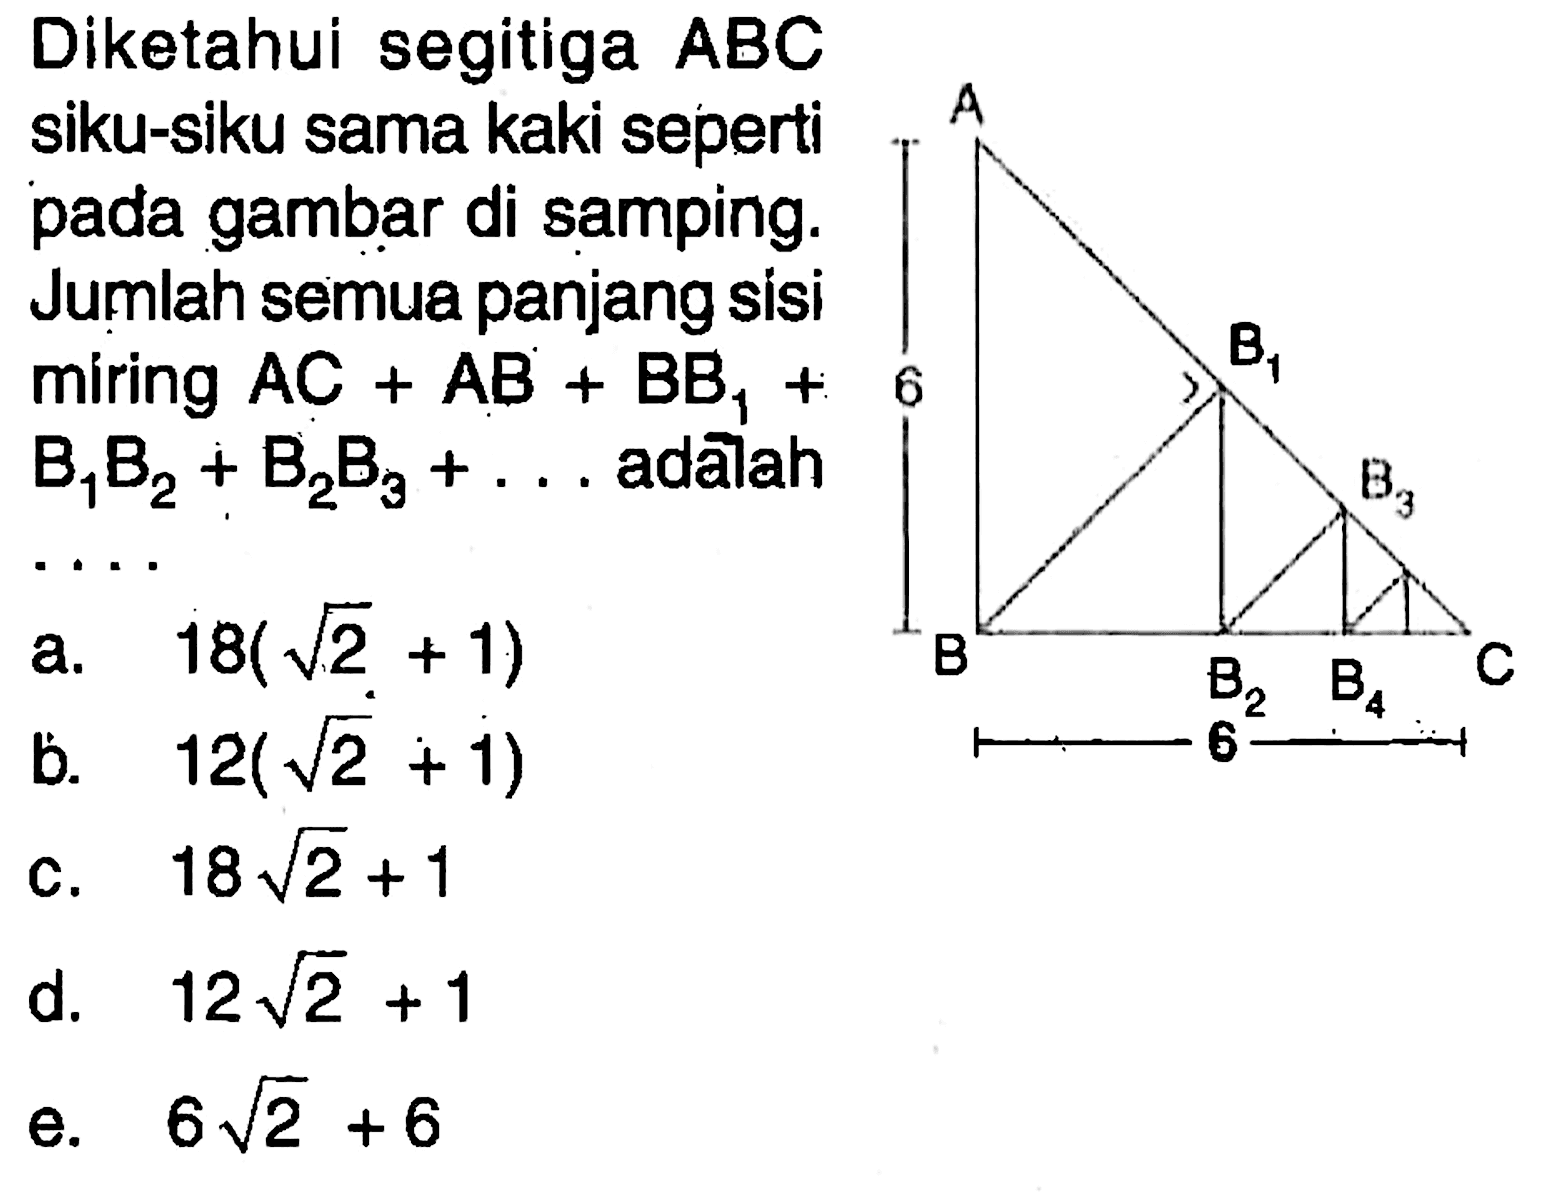 Diketahui segitiga ABC siku-siku sama kaki seperti pada gambar di samping. Jumlah semua panjang sisi miring AC+AB+BB1+B1B2+B2B3+ . . adalah